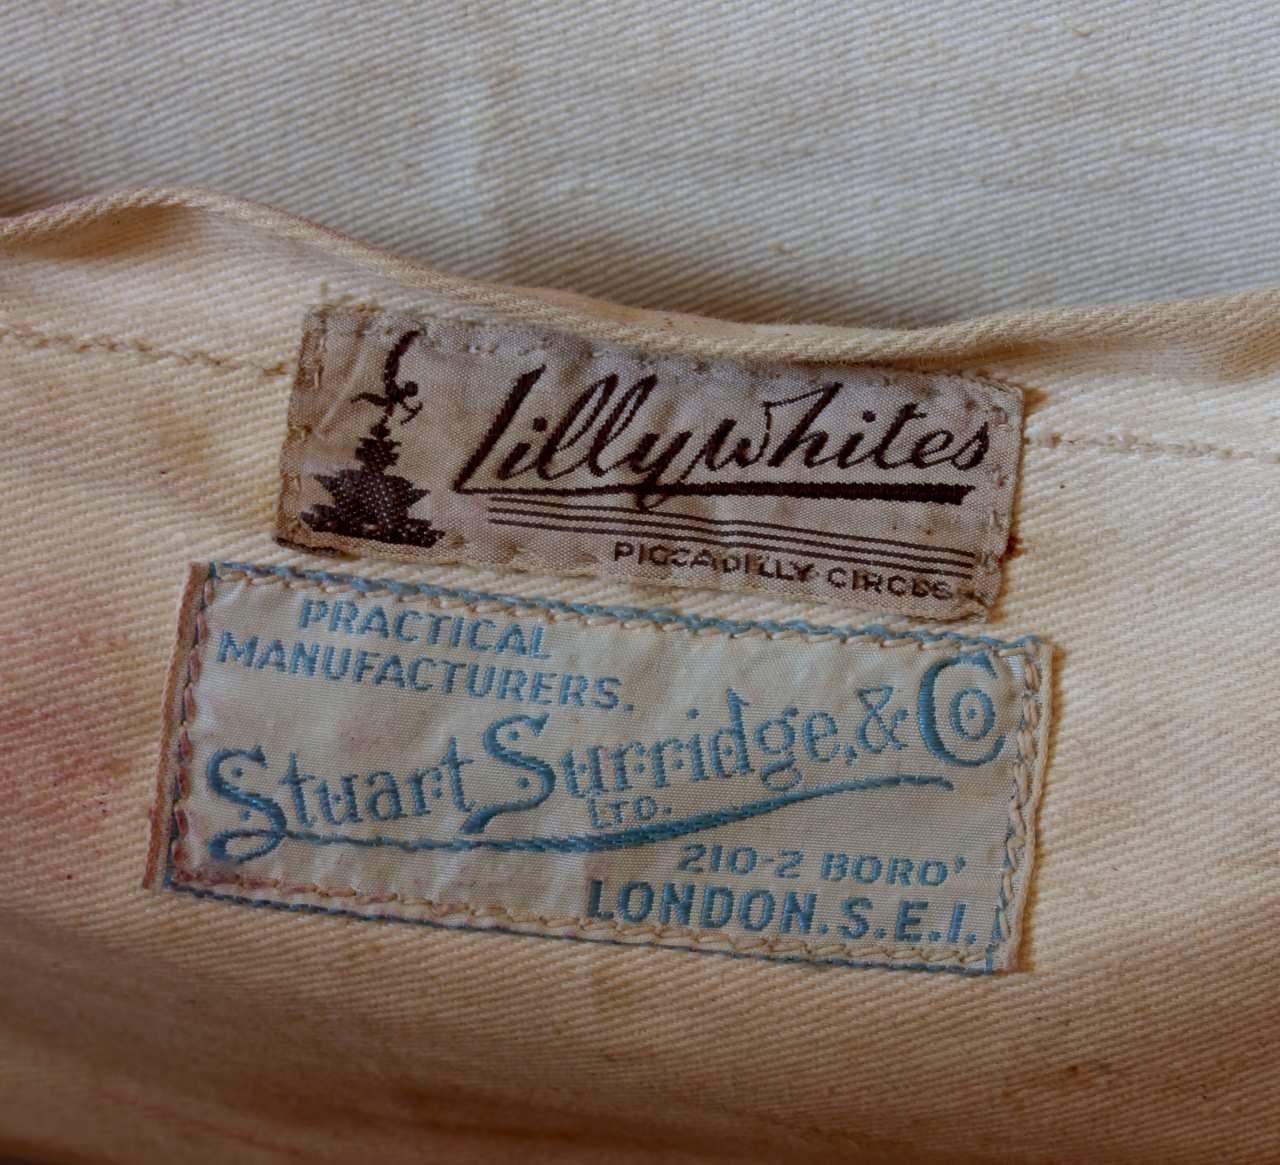 Leather Lilywhites Stuart Surridge Cricket Kit Bag. Large Coffin Holdall.